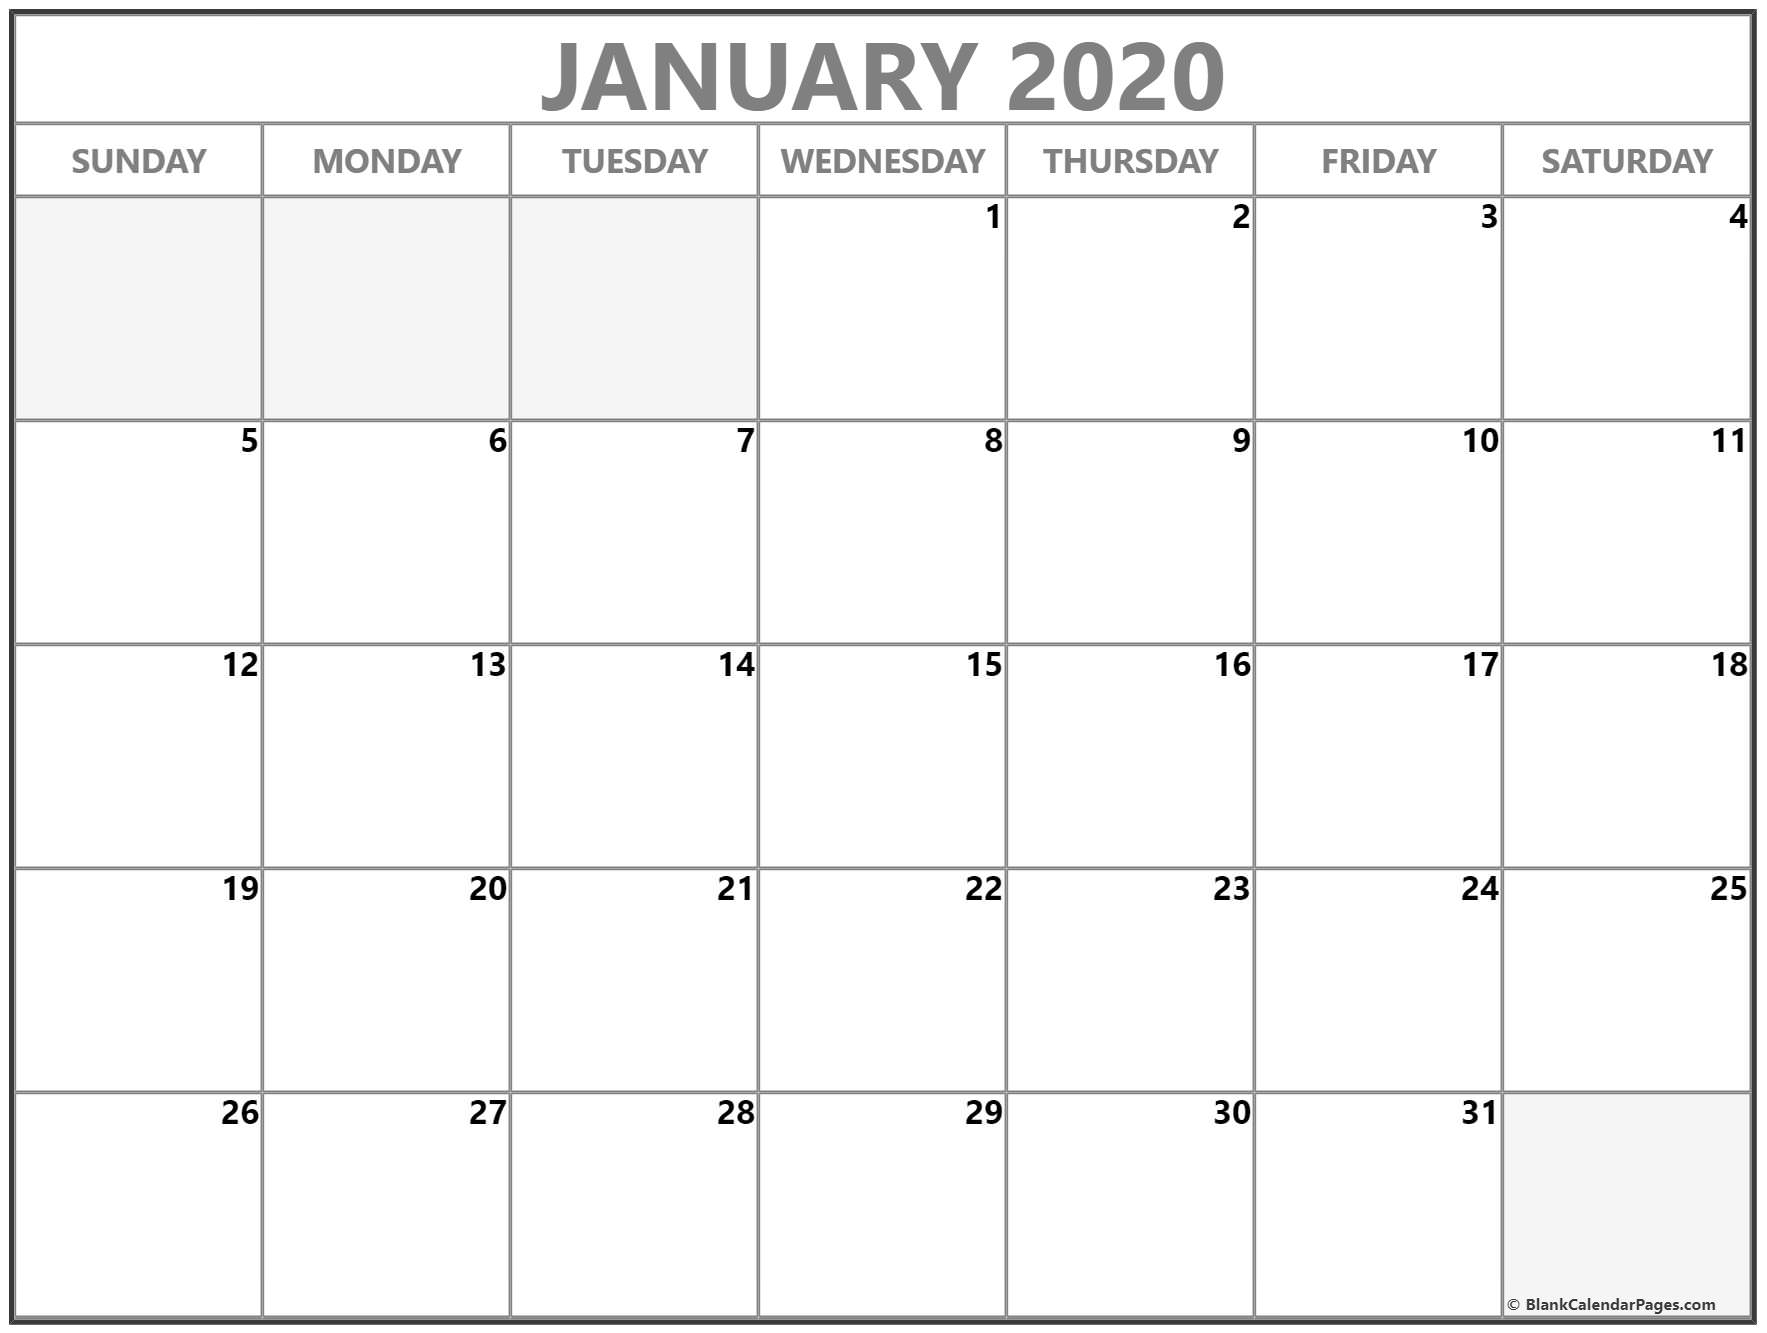 January 2020 Calendar | Free Printable Monthly Calendars throughout Free Printable 5 Day Monthly Calendar 2020